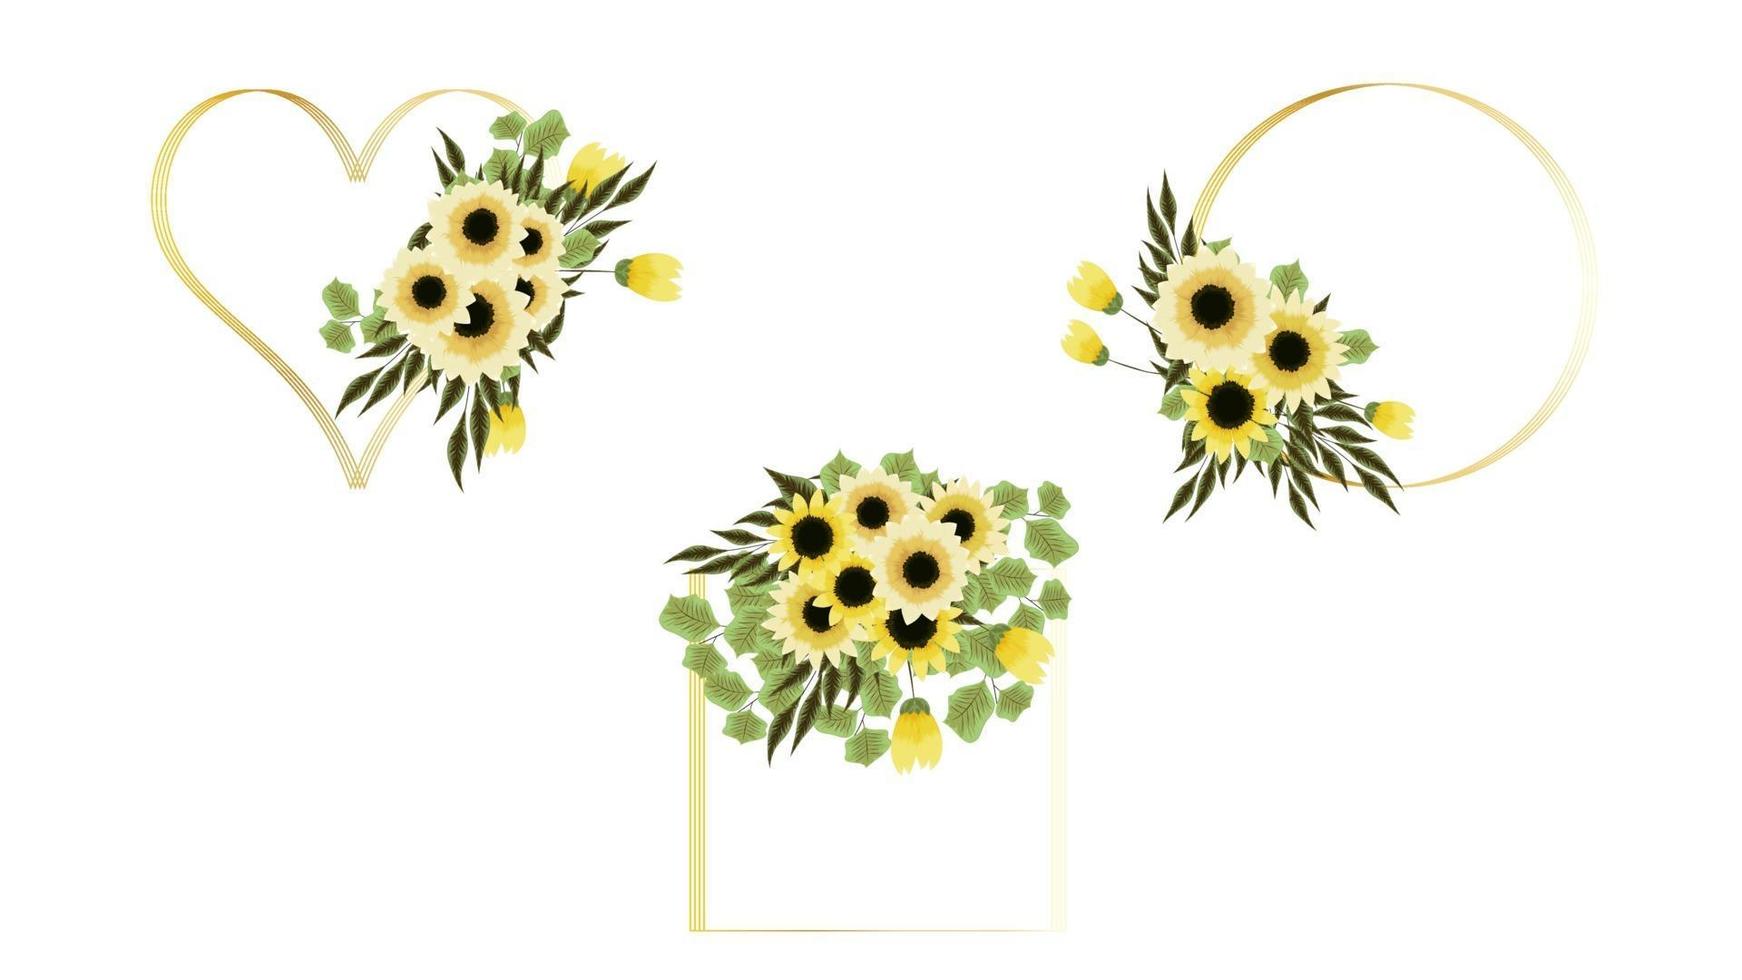 botanical flower invitation greeting card for wedding decoration event vector